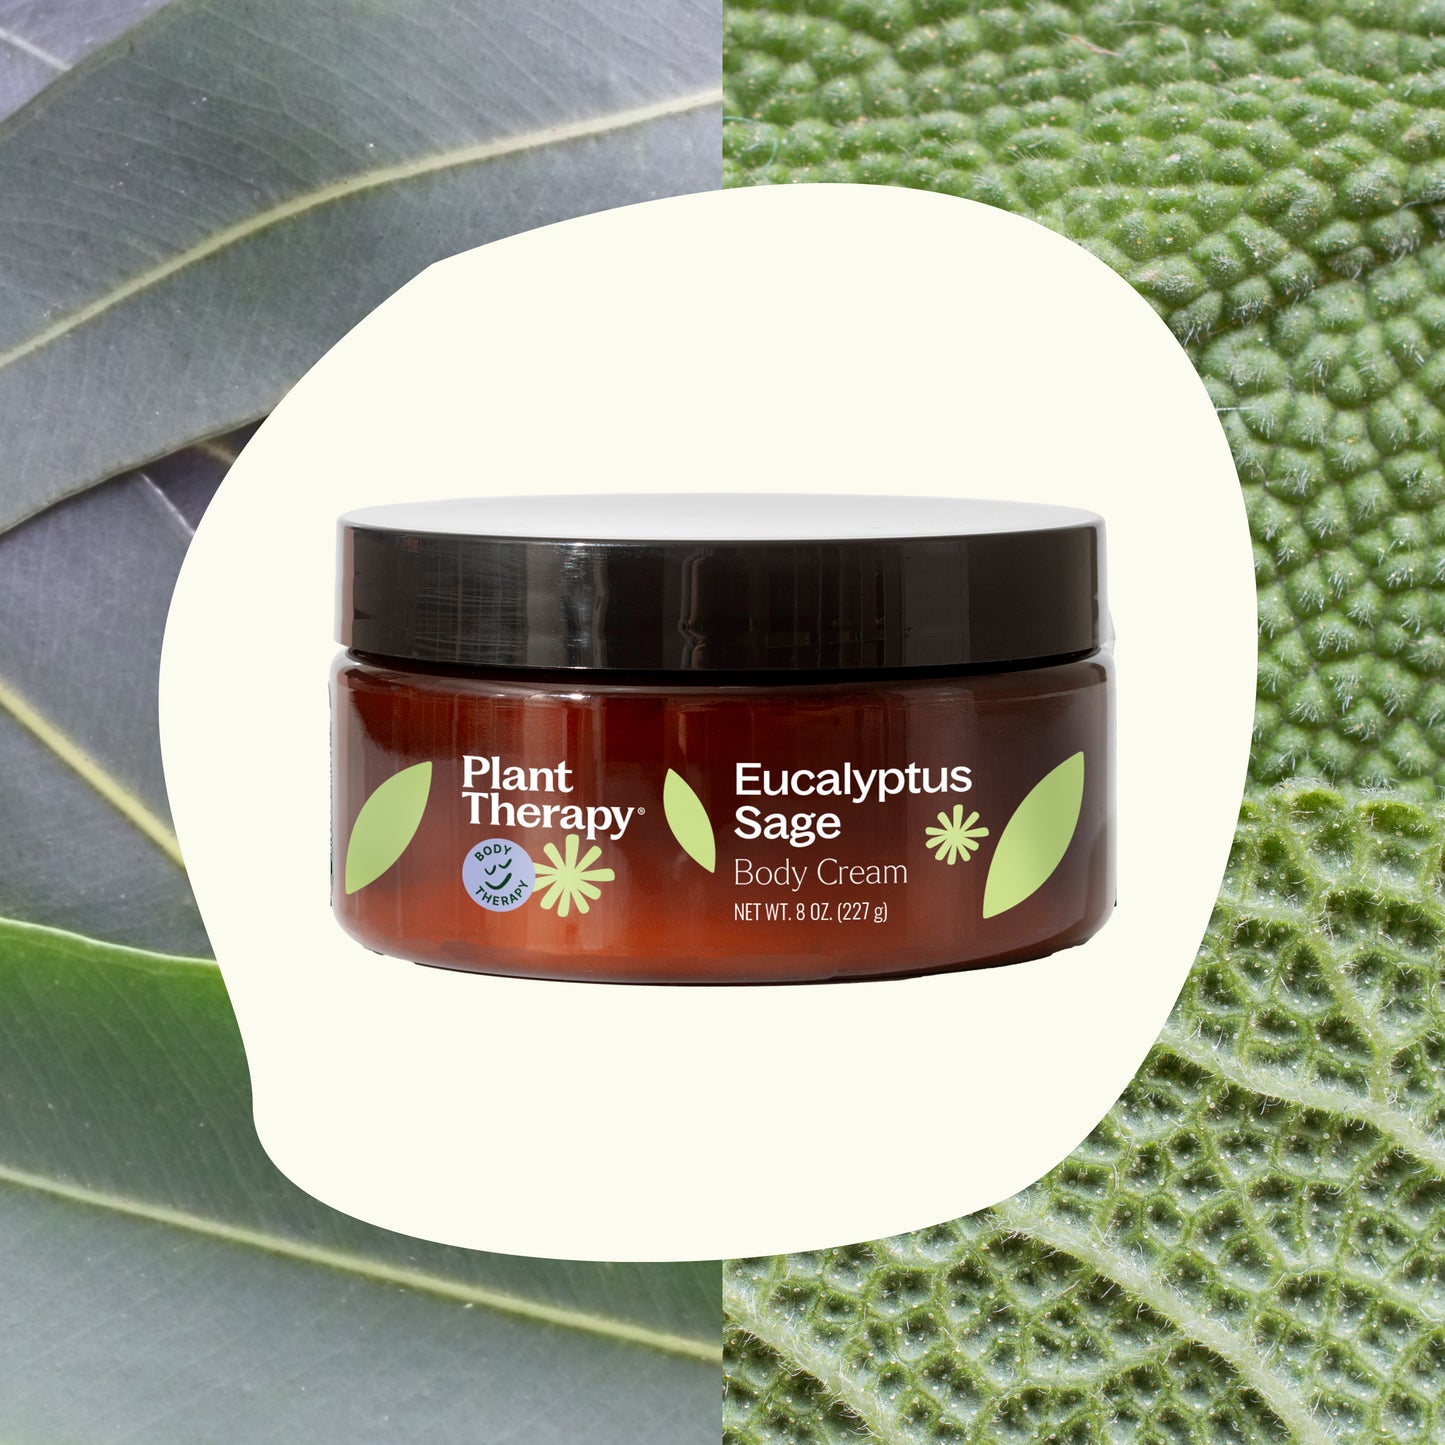 Eucalyptus Sage Body Cream